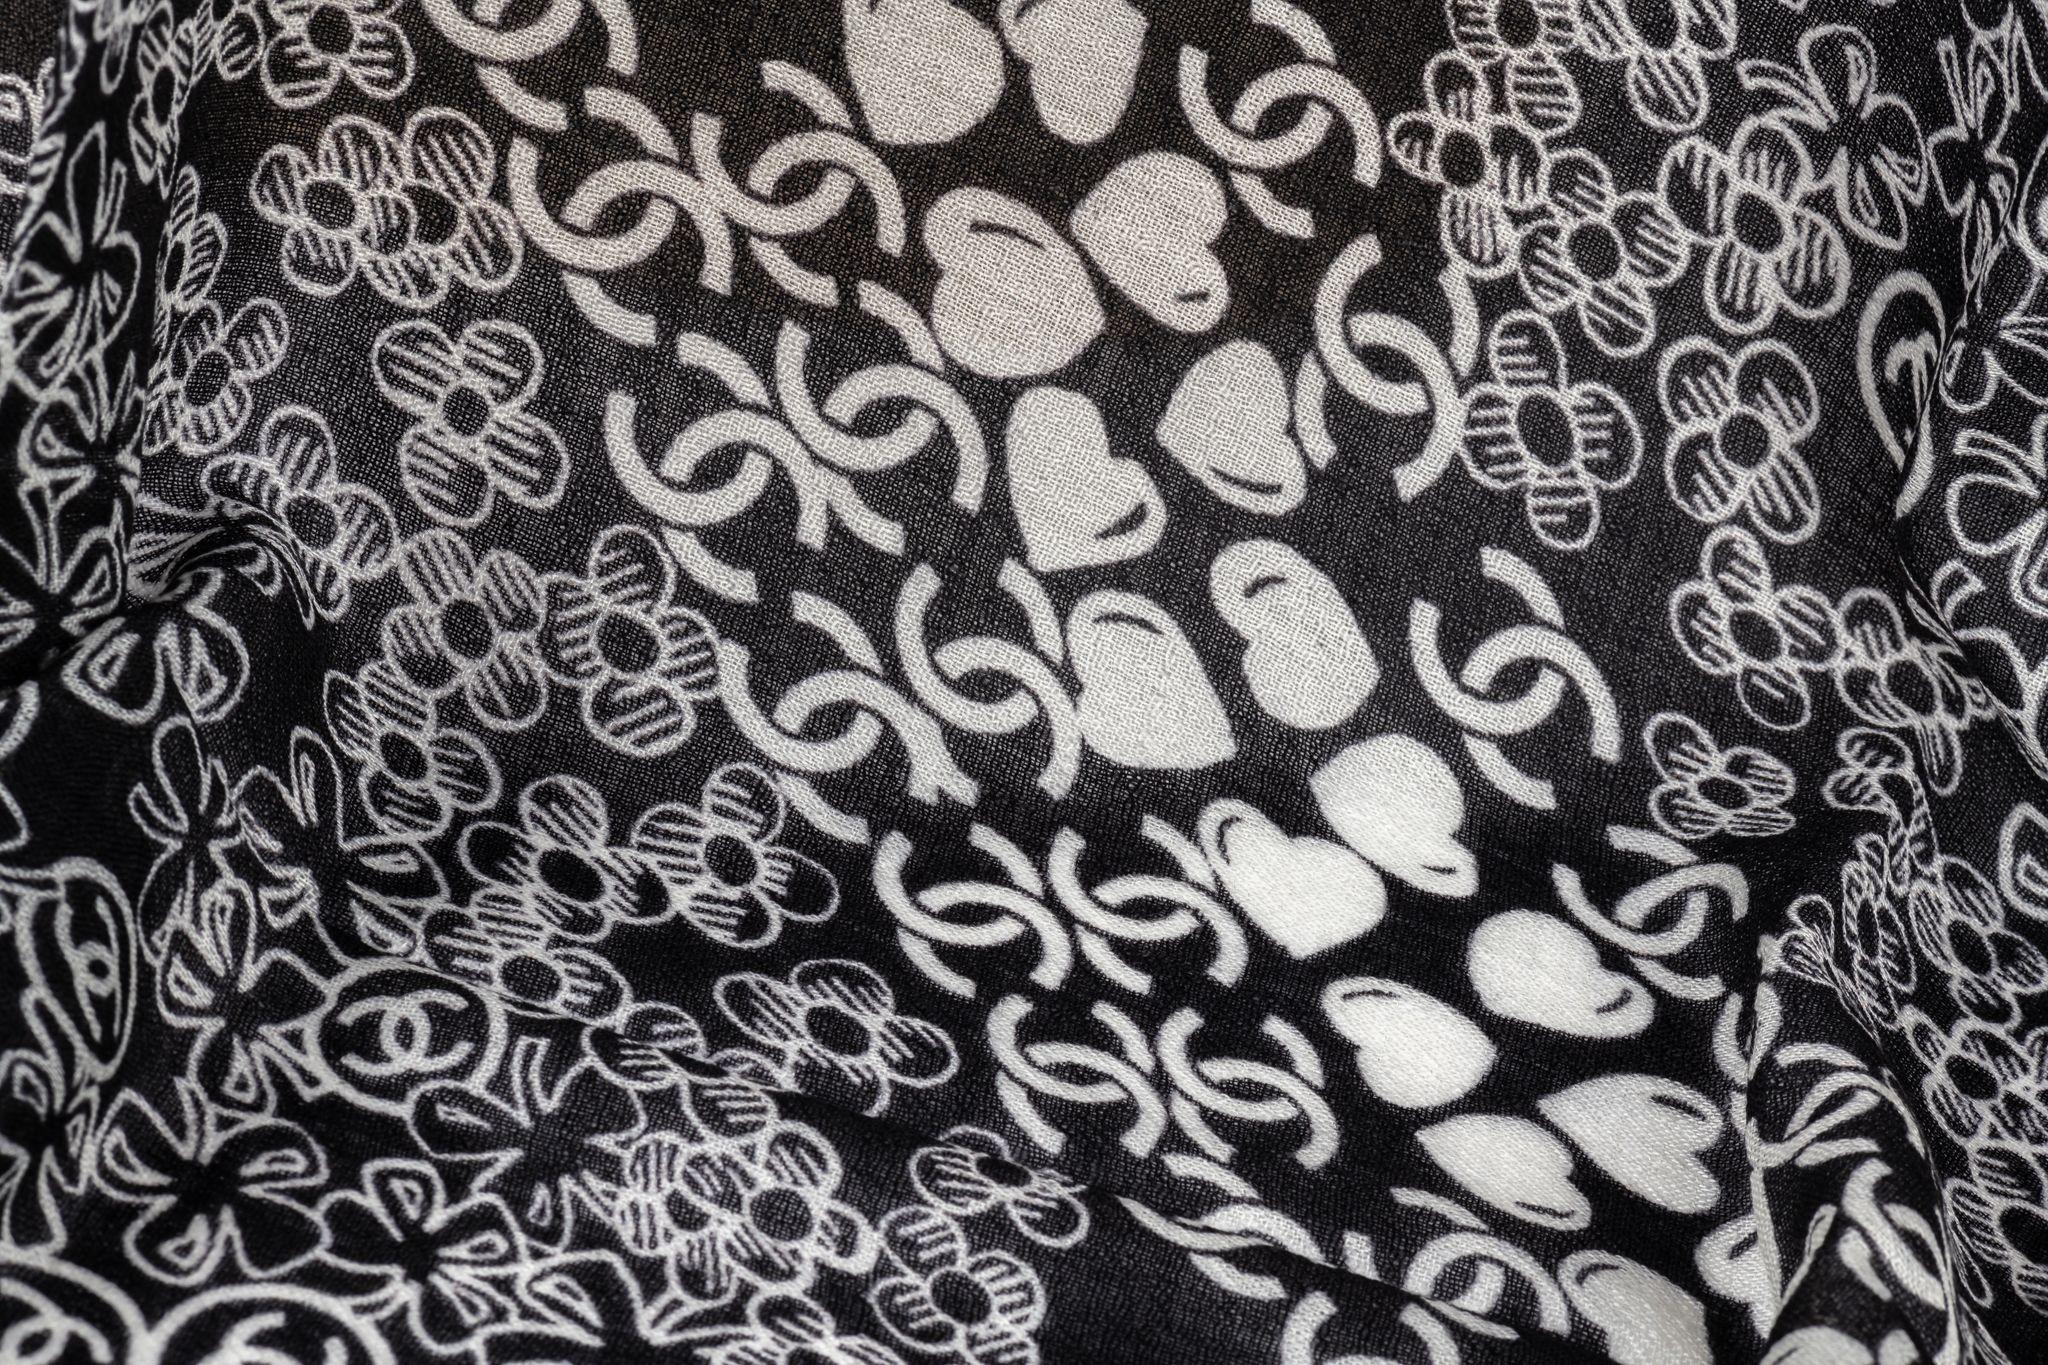 Chanel new black white cashmere shawl. Clover and multi logo design. Care tag attached .
